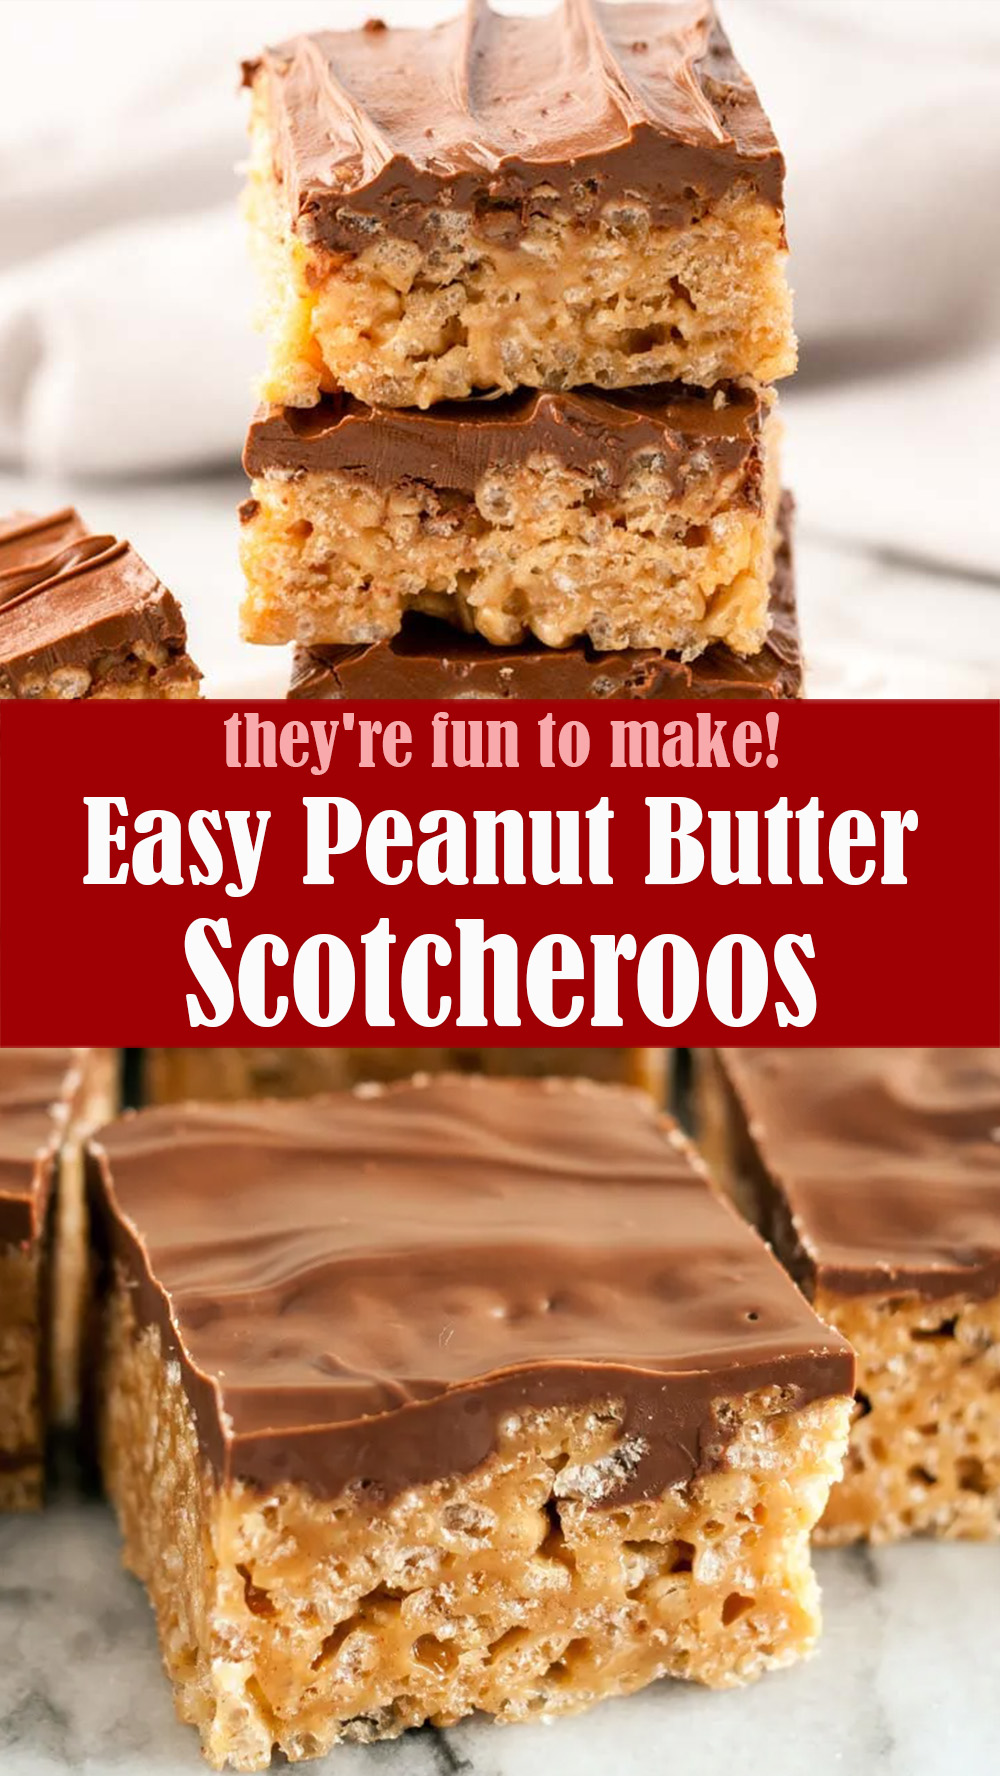 Easy Peanut Butter Scotcheroos